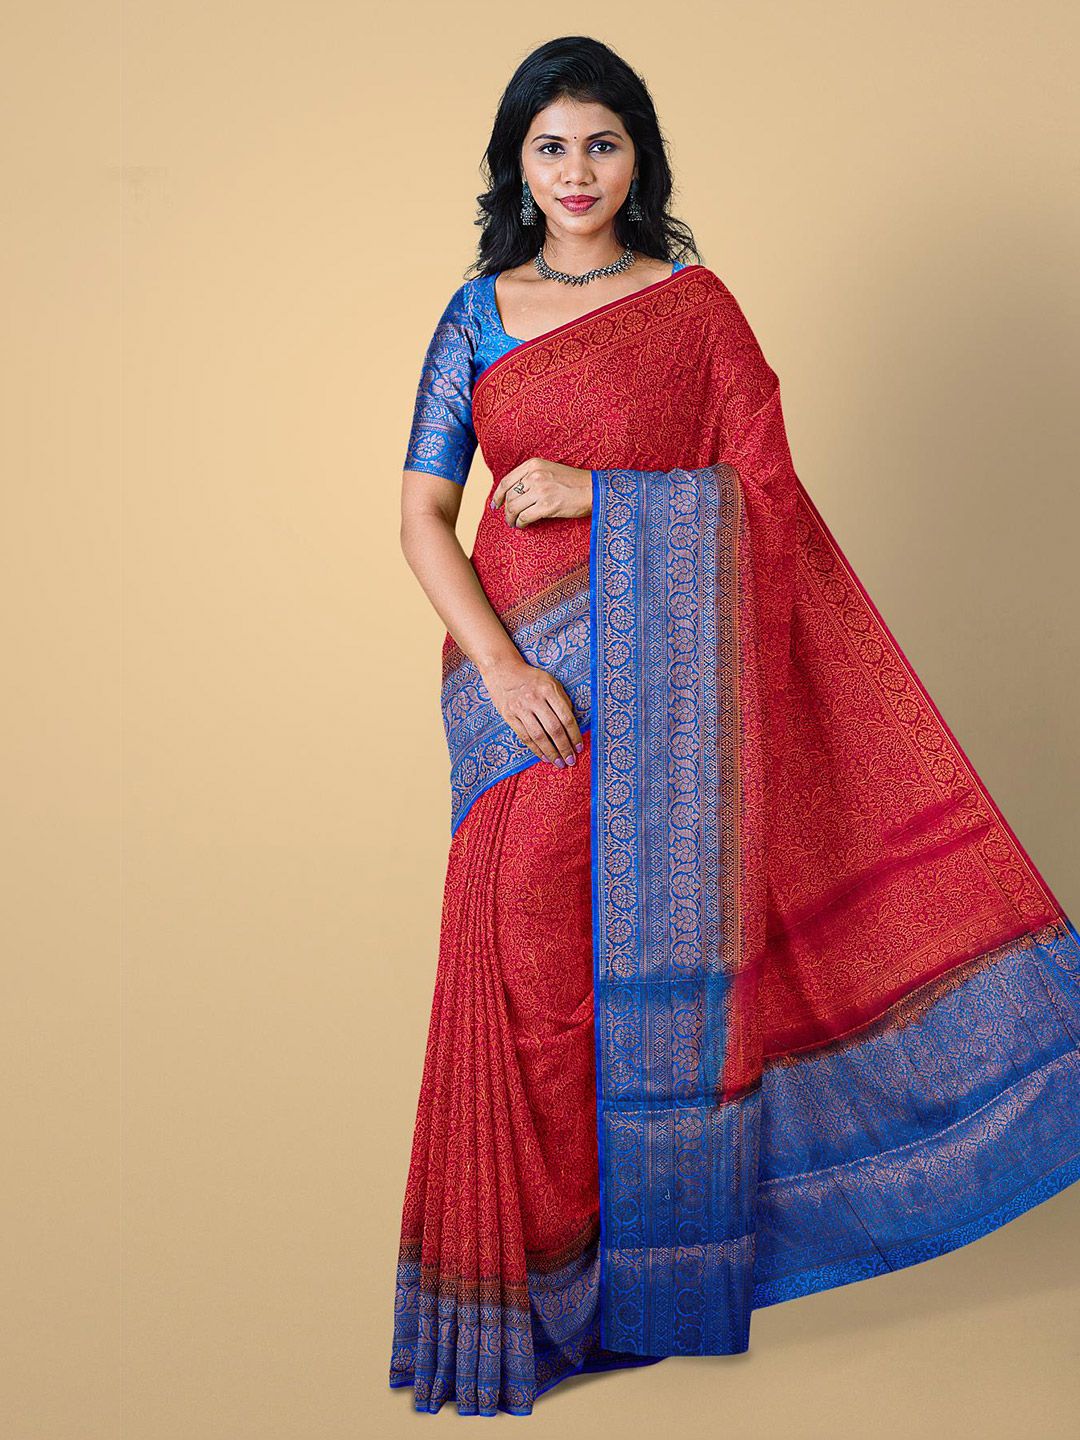 Kalamandir Women Red & Blue Ethnic Motifs Zari Silk Blend Saree Price in India